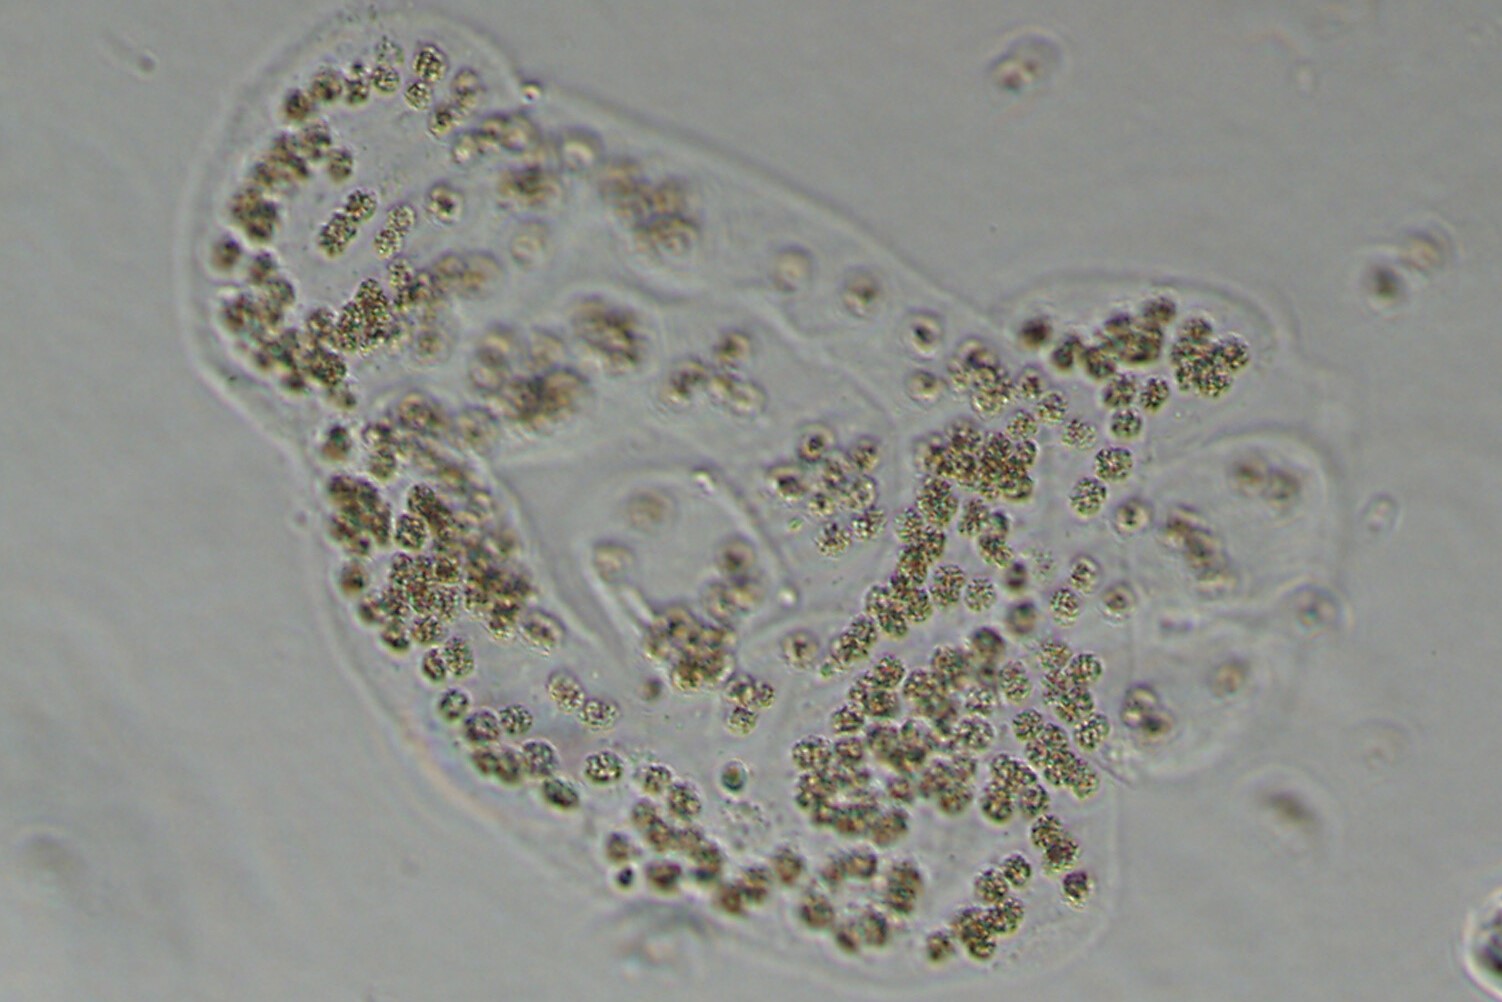 Light micrograph image of Mircrocystis wesenbergii